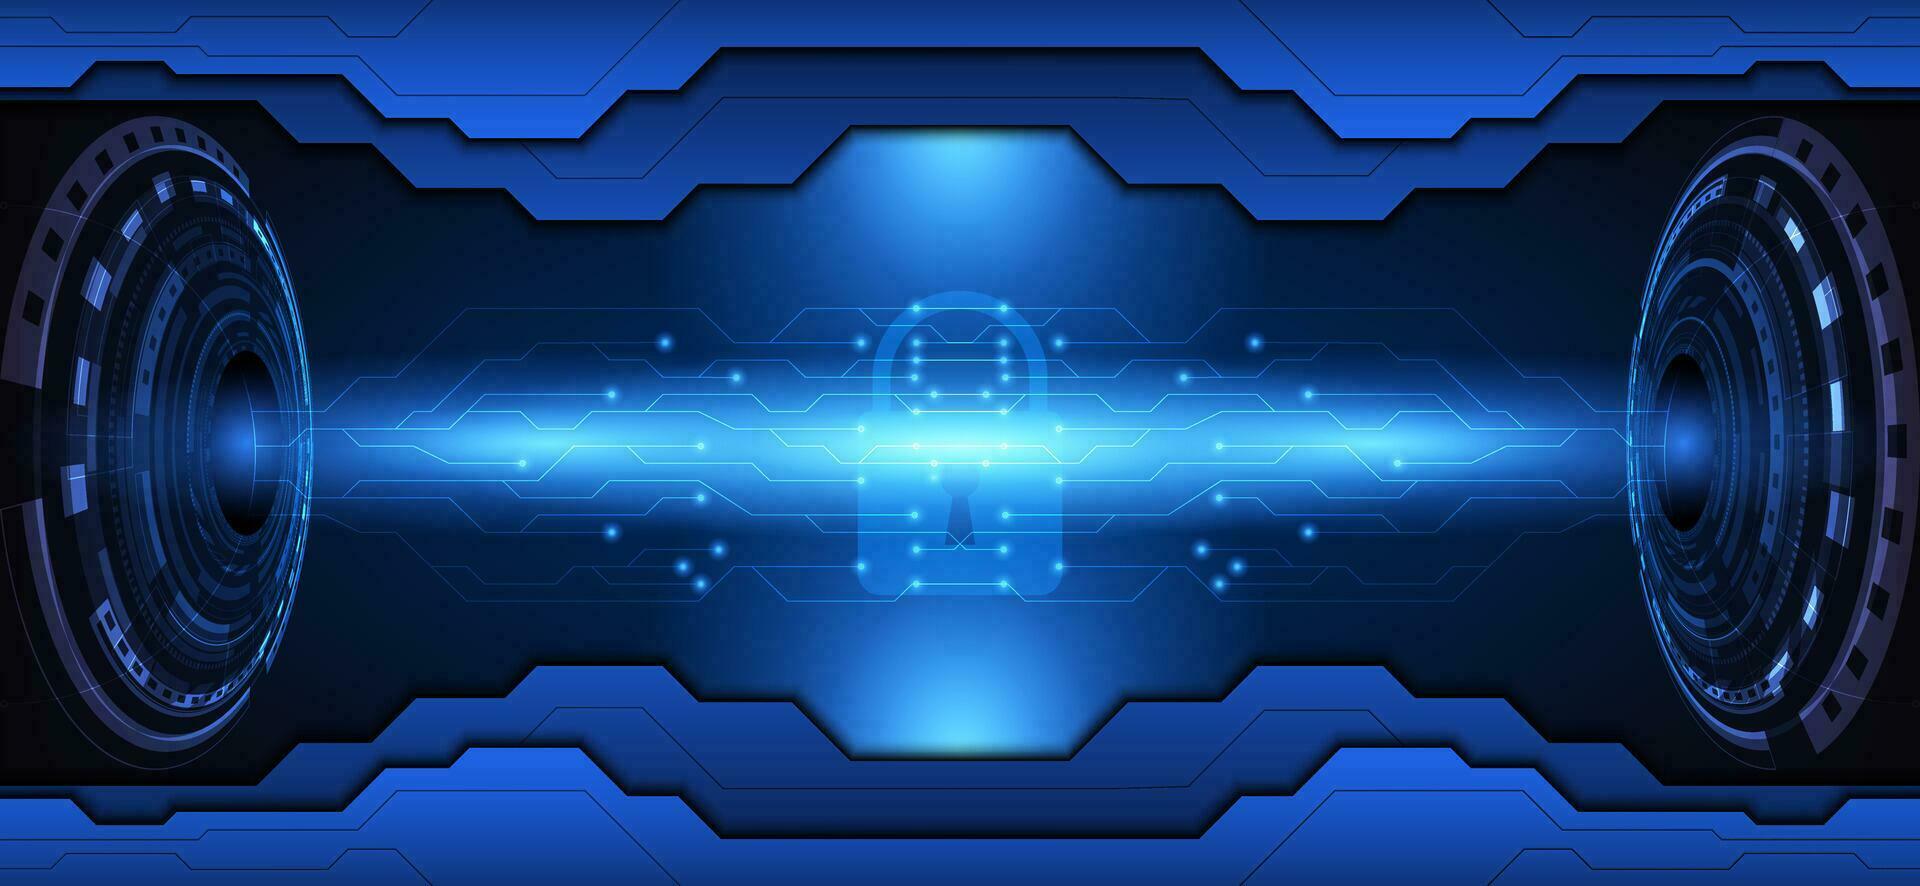 resumen tecnología Gemelos circulo comunicación candado de alta tecnología futurista ciber seguridad llave oscuro azul antecedentes vector ilustración